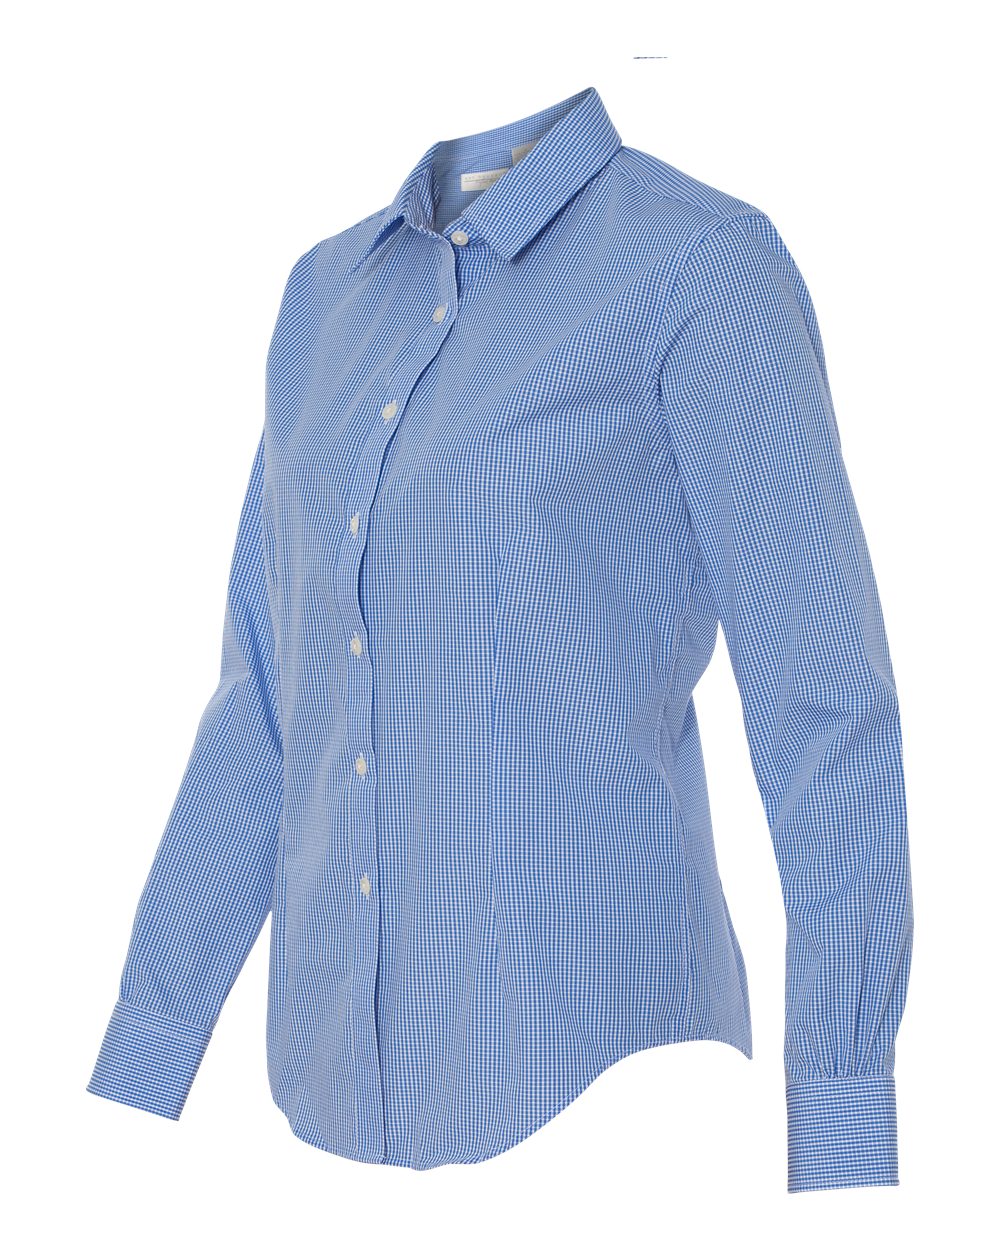 Van Heusen 13V0226 - Ladies' Gingham Check Shirt